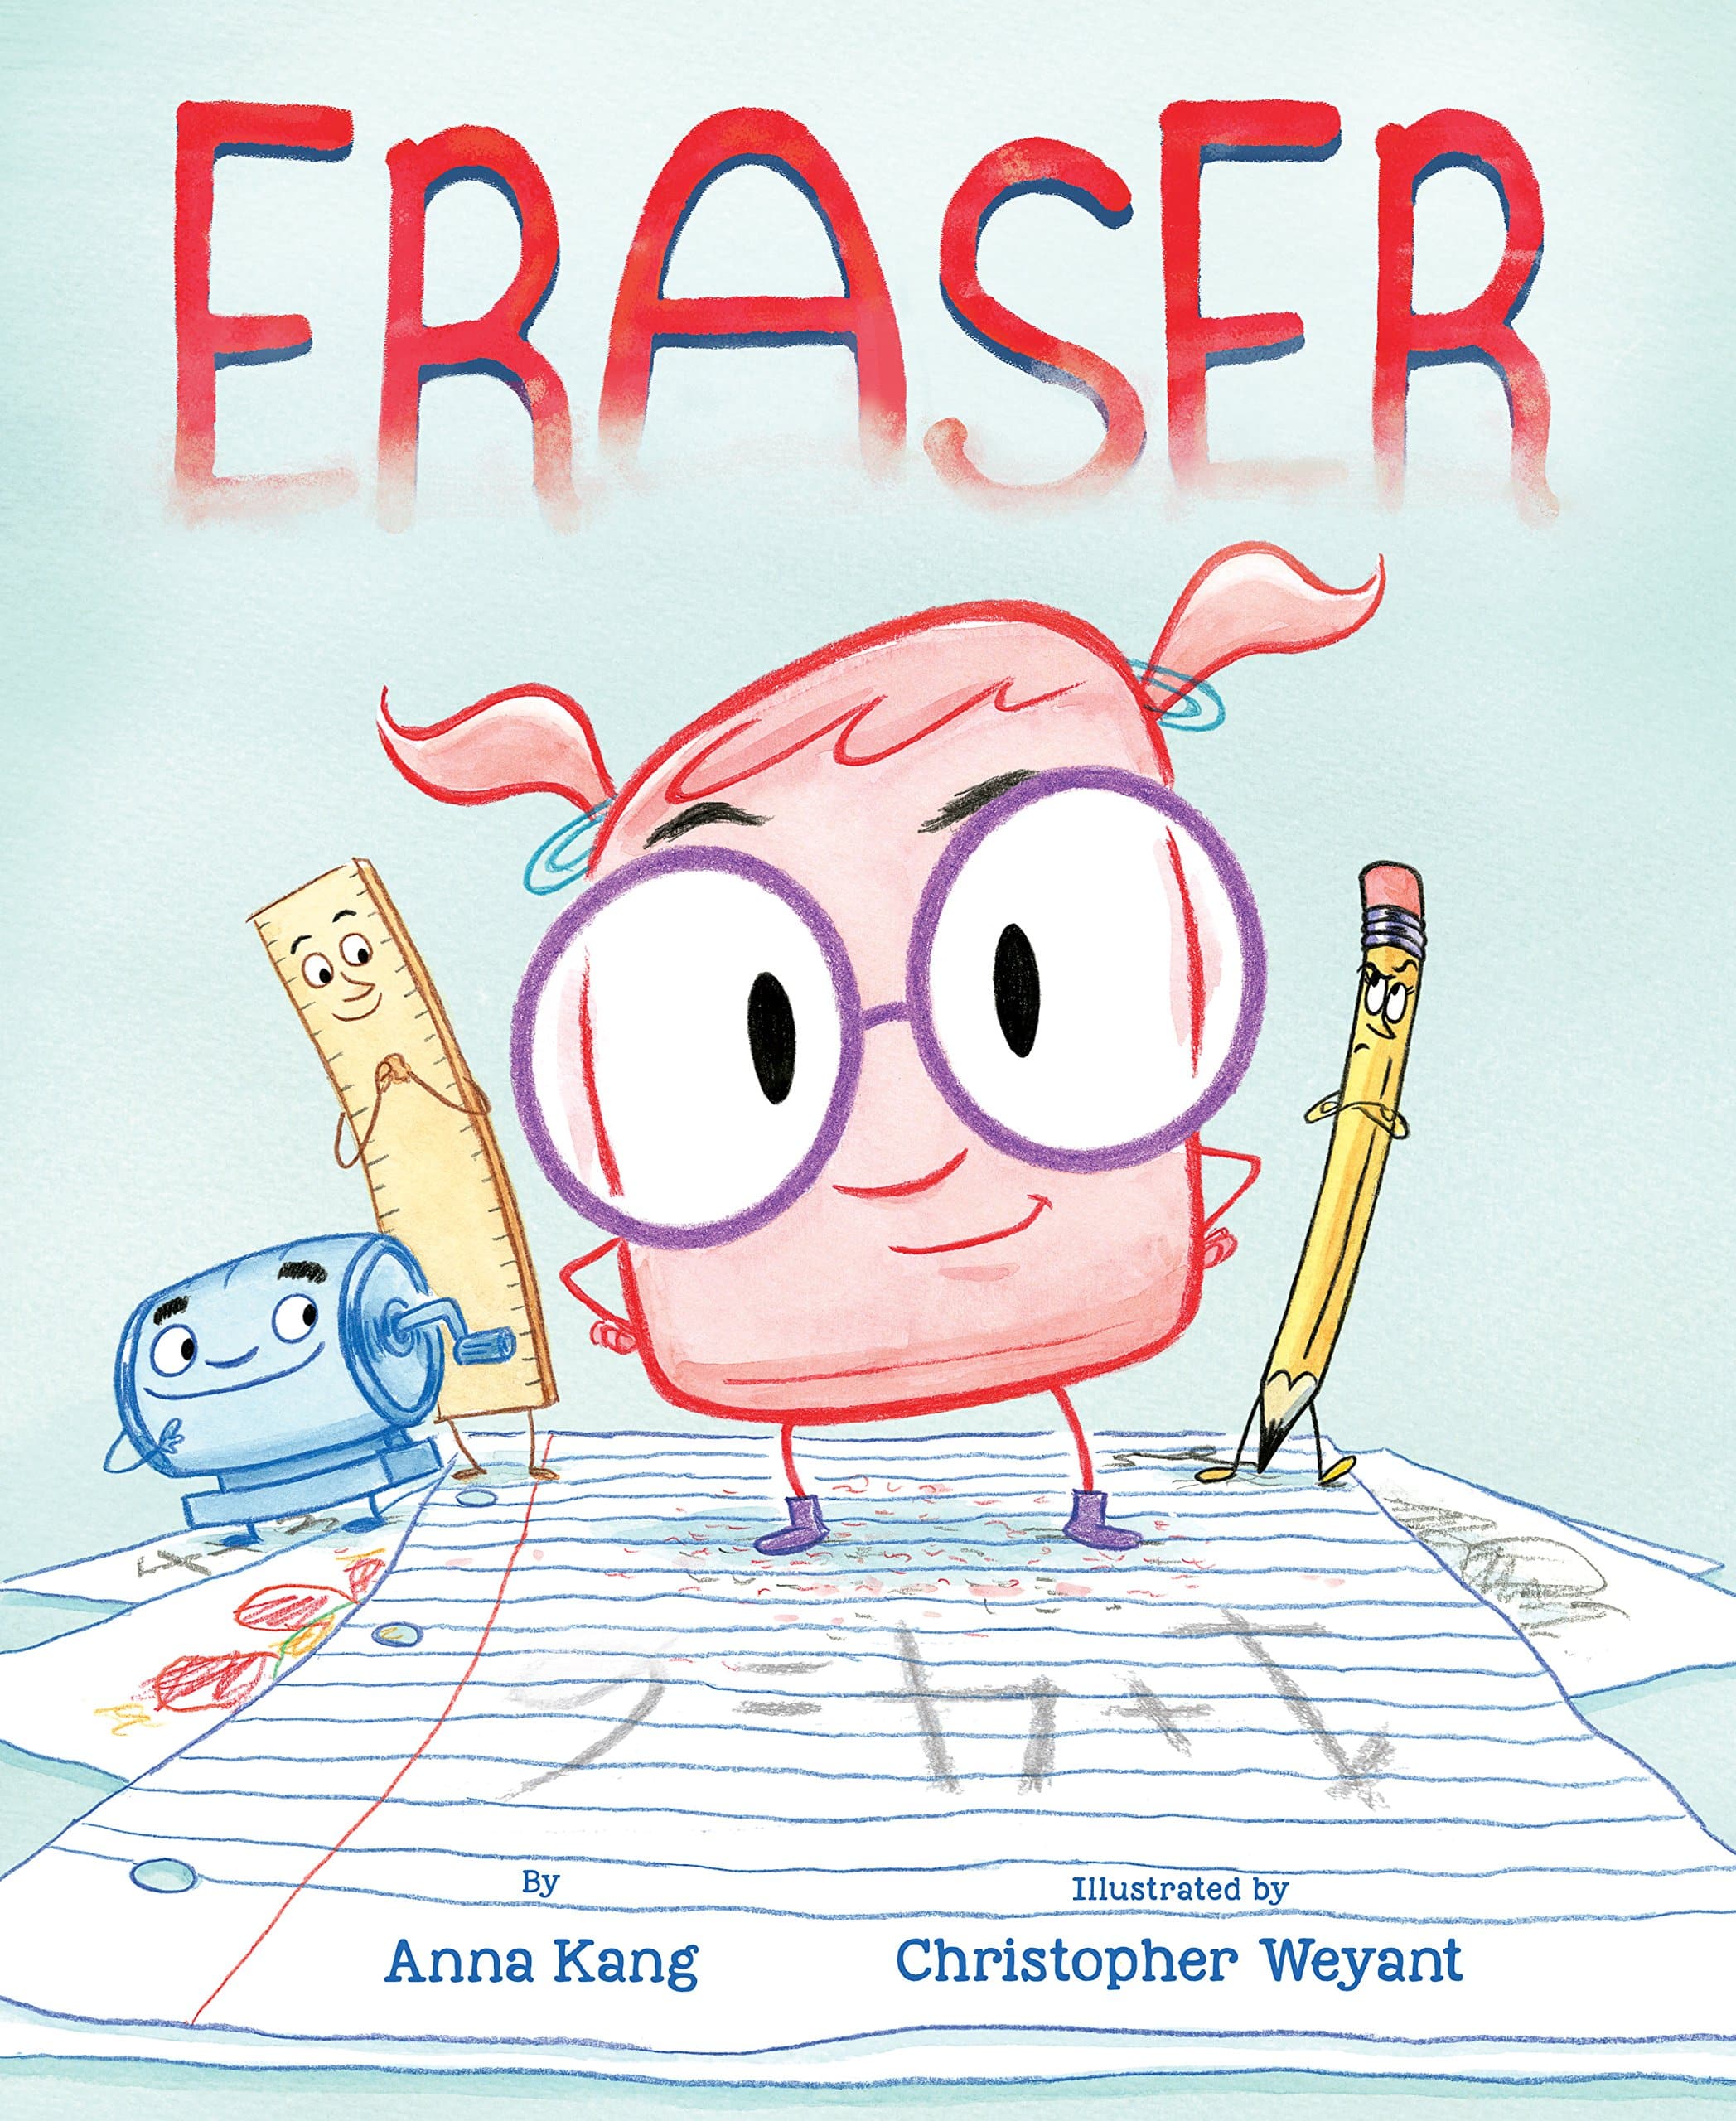 DEAL ALERT: Eraser  – Children’s book deal of the day. 61% off